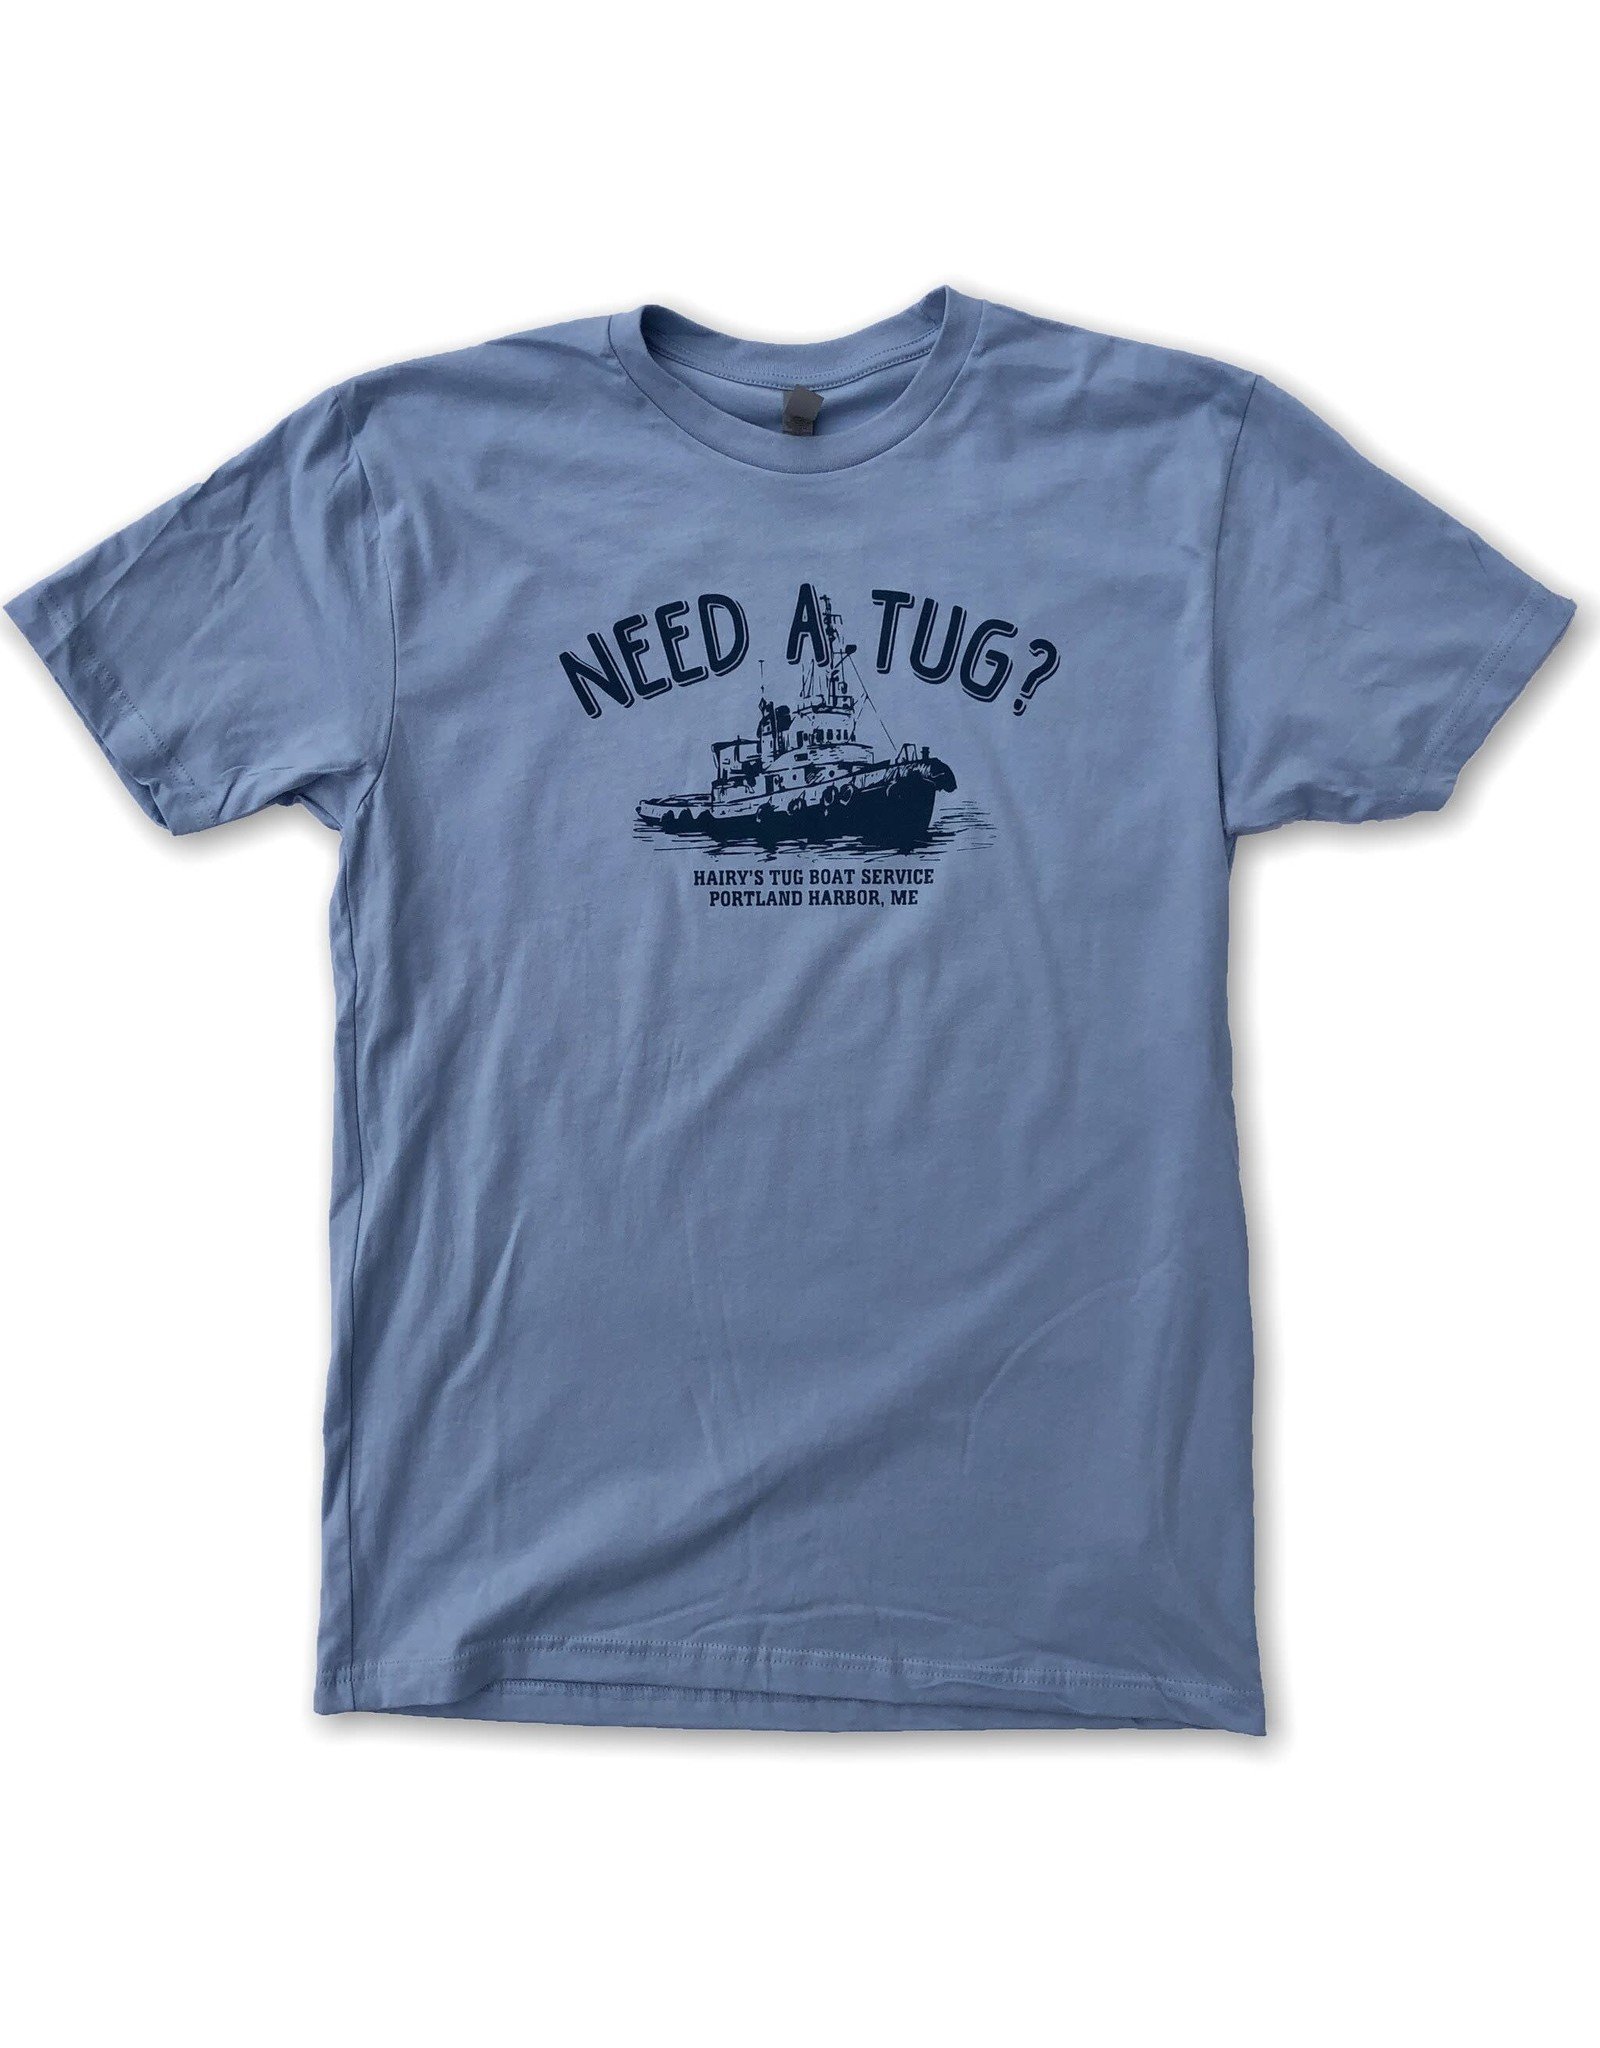 Shane Ruff Studio Burly Shirts Need a Tug? Shirt